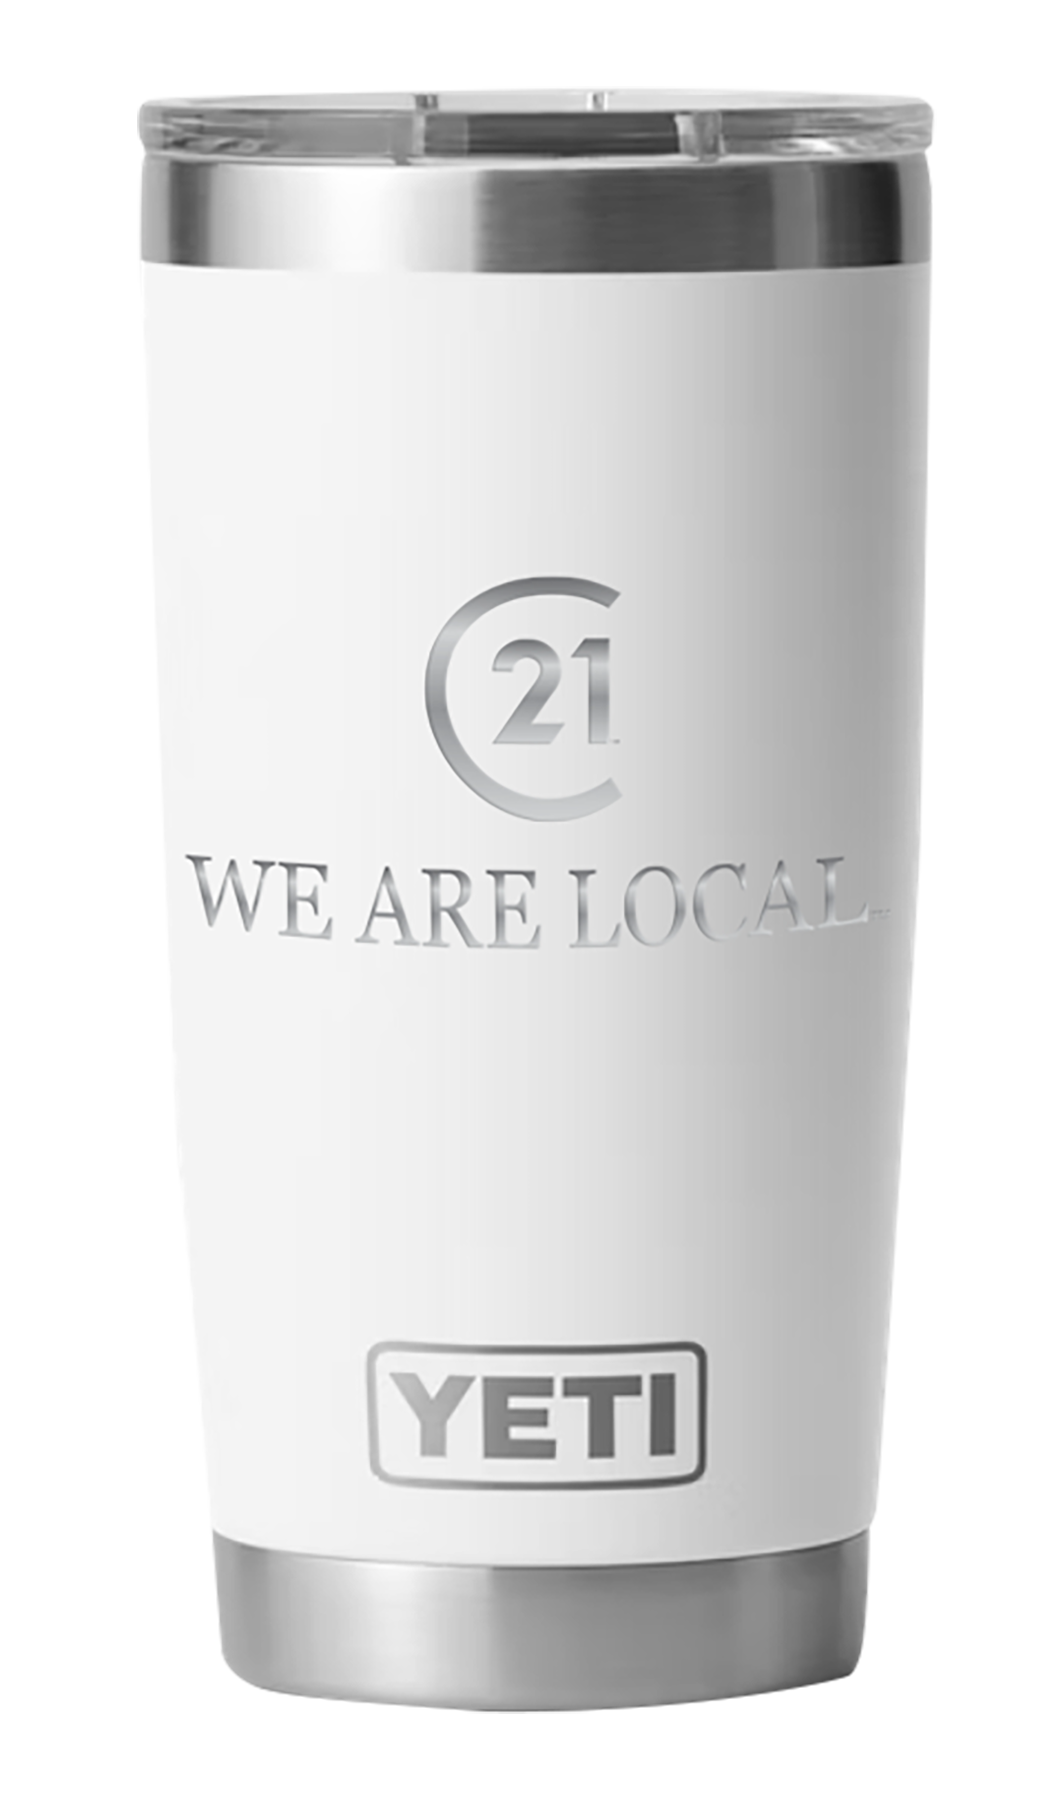 C21 WE ARE LOCAL Genuine Yeti Brand 20oz Stainless Steel Tumbler